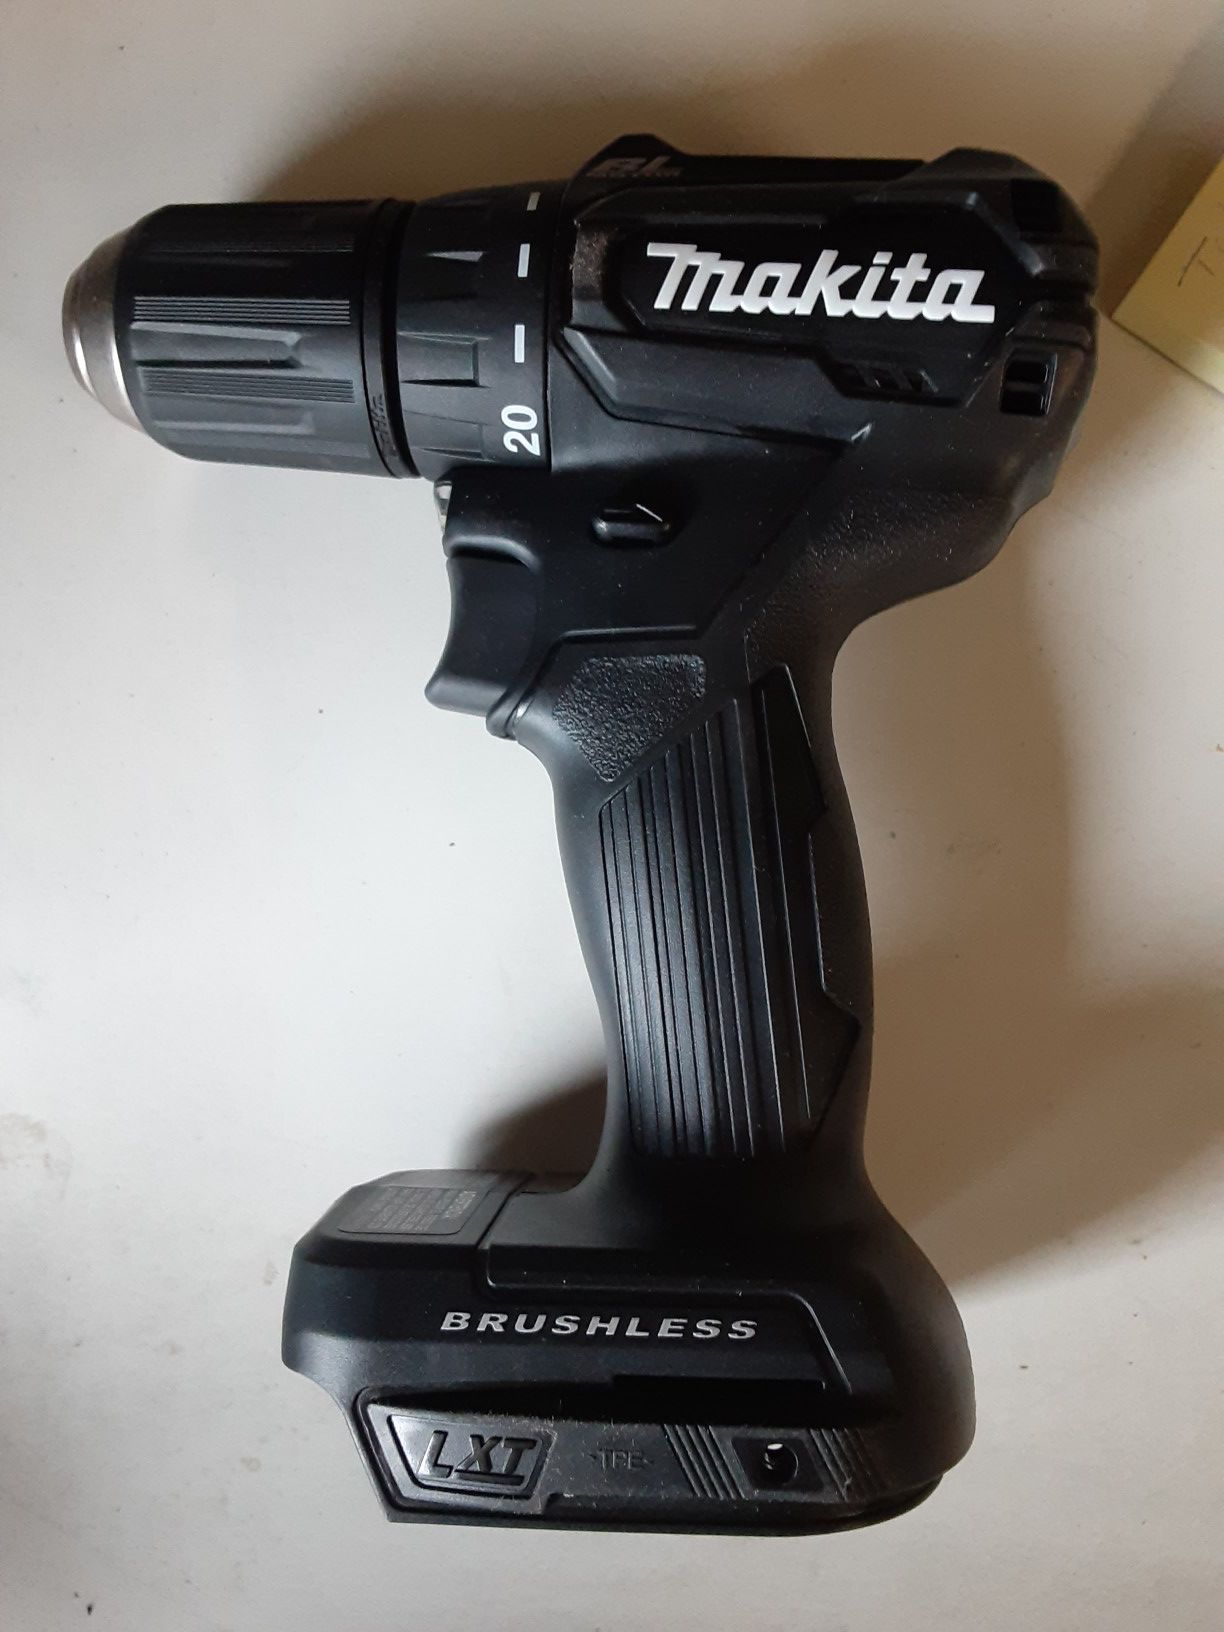 NEW Makita brushless 1/2 driver drill